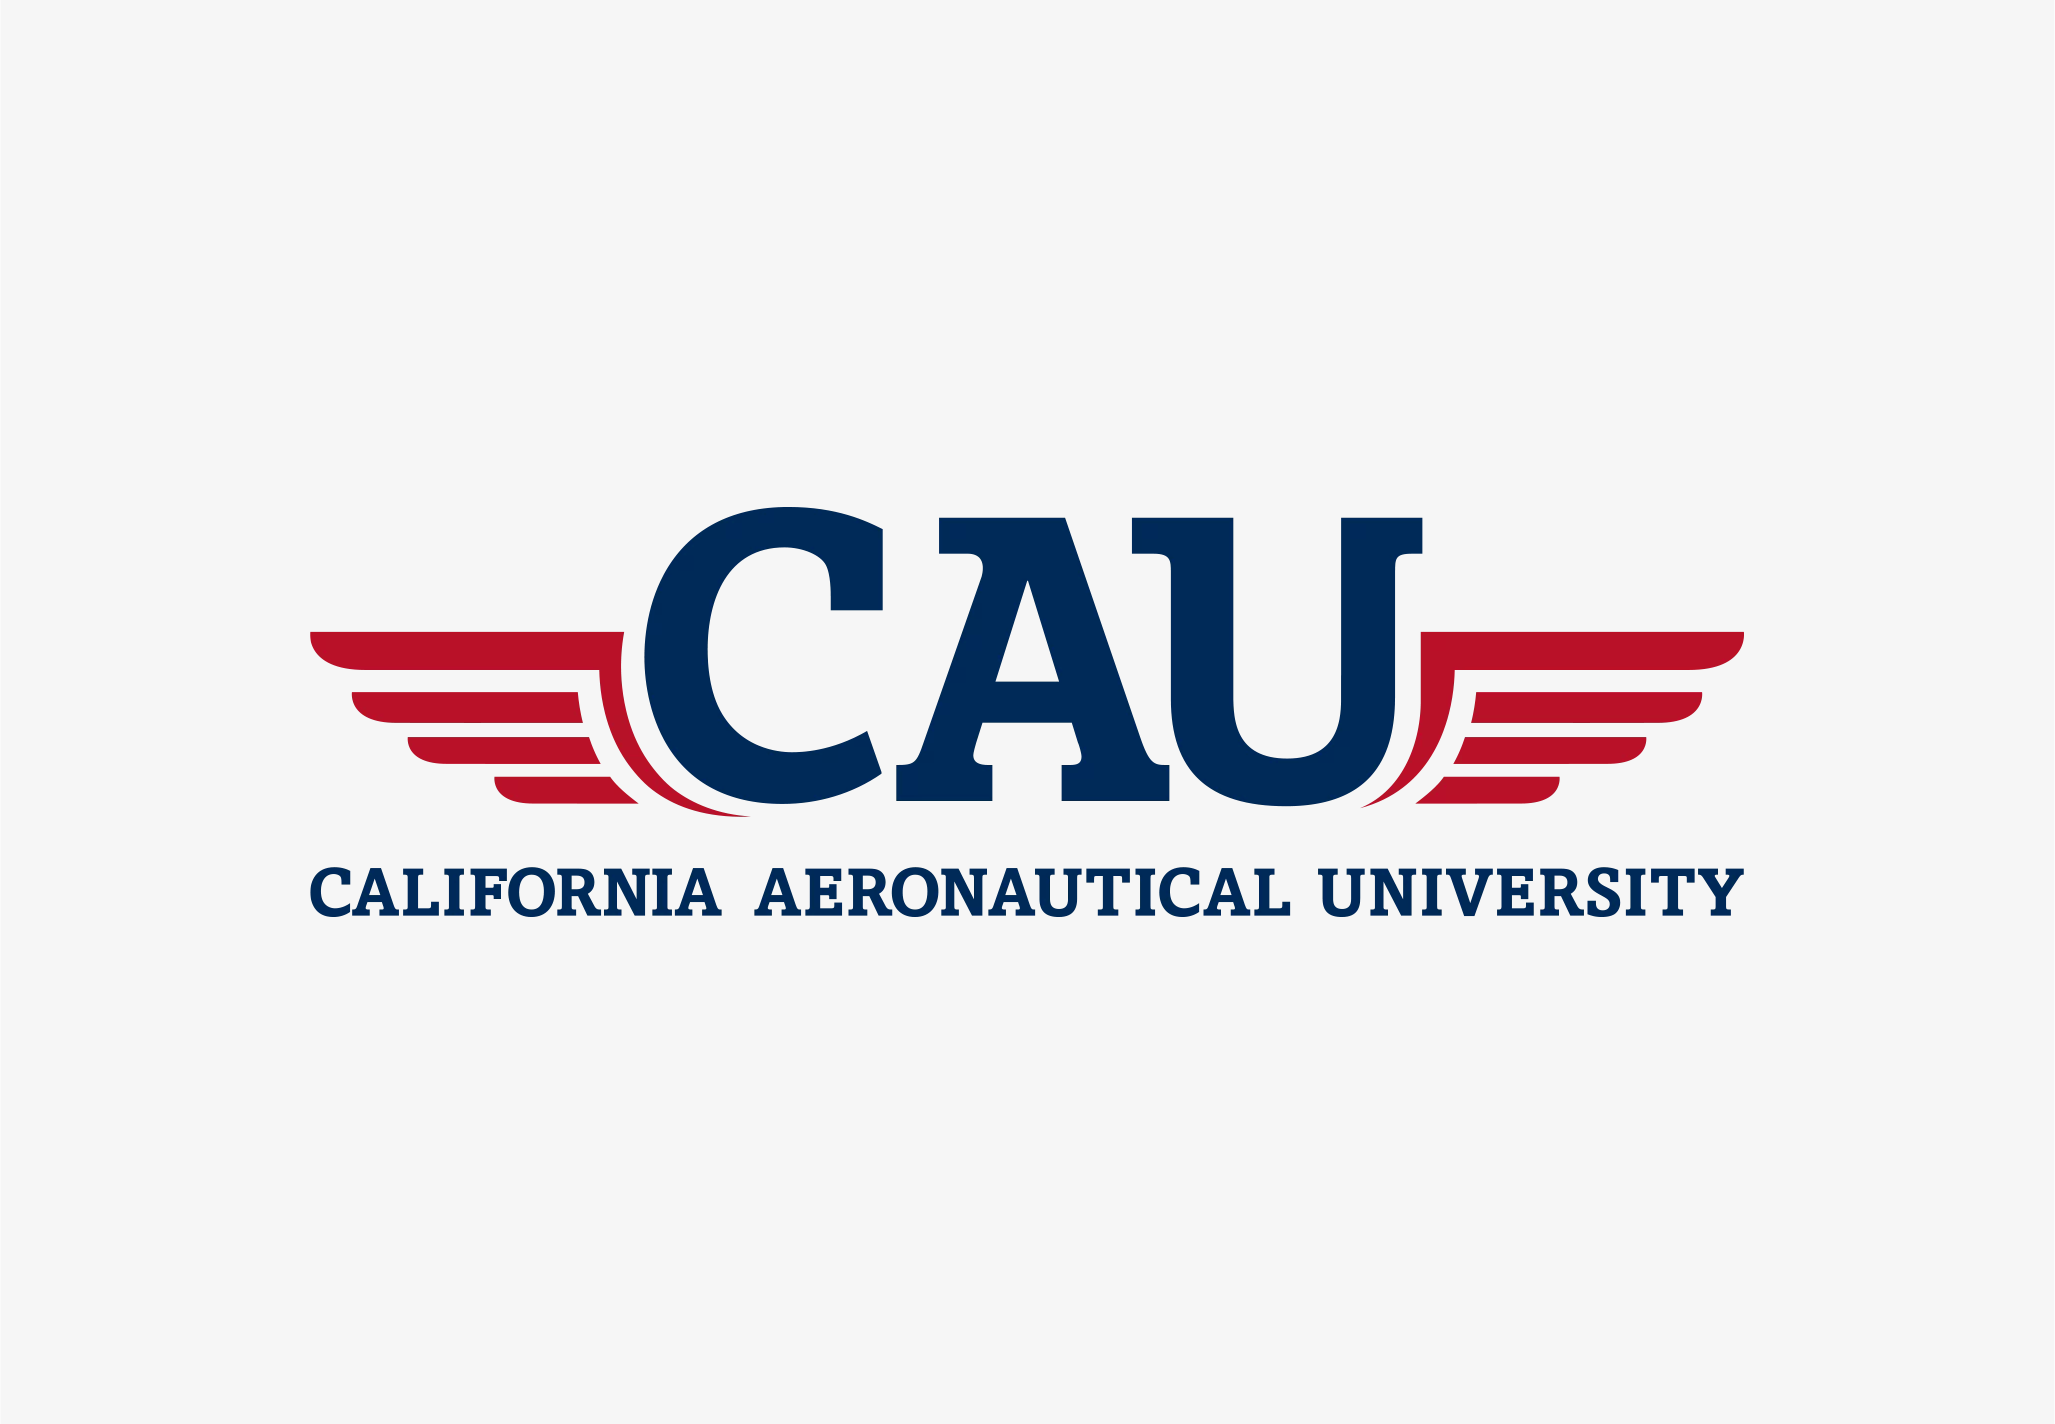 California Aeronautical University